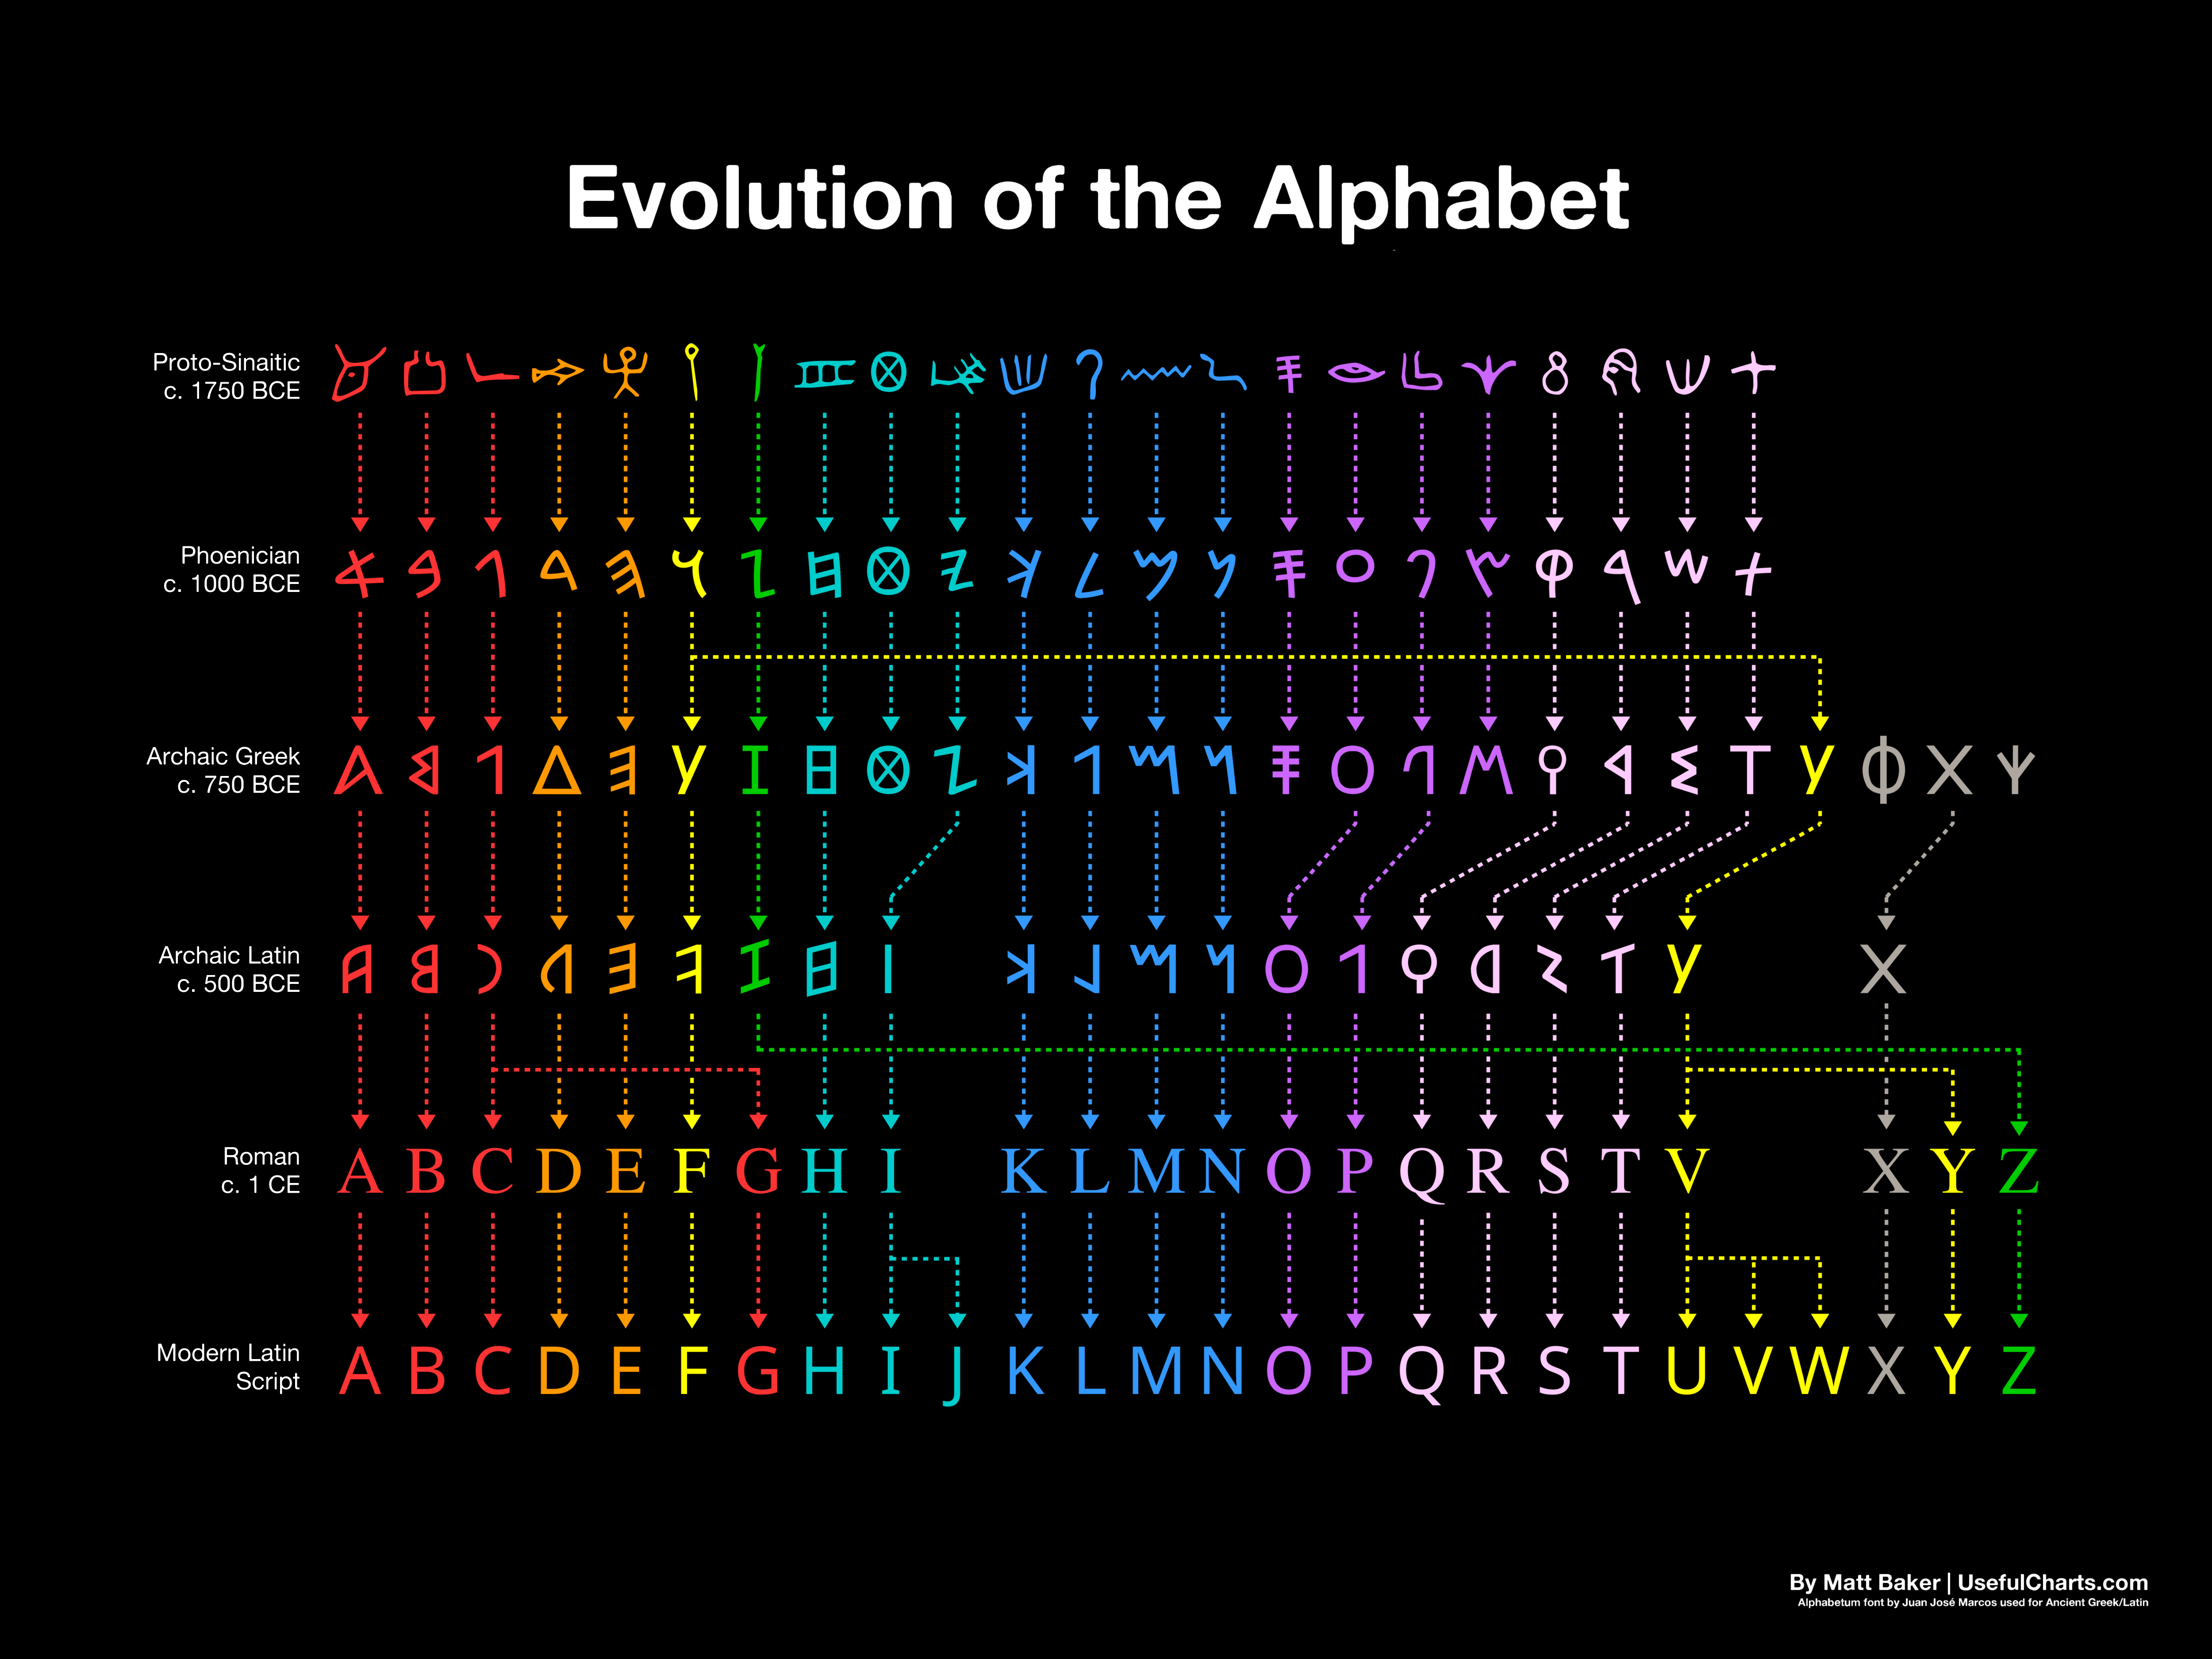 evolution of the alphabet - Evolution of the Alphabet Promo yo r Www LV8W . 1080 Ace 4 91424102 Y Zwy 024W six imit o in dist oxy Archaic Latina c. 500 Bce iii ii myidi x 1 d l 1 Bcdefghi Klmnopqrstv Xyz demic Abcdefghijklmnopqrstuvwx Y Z By Mad Baker U l